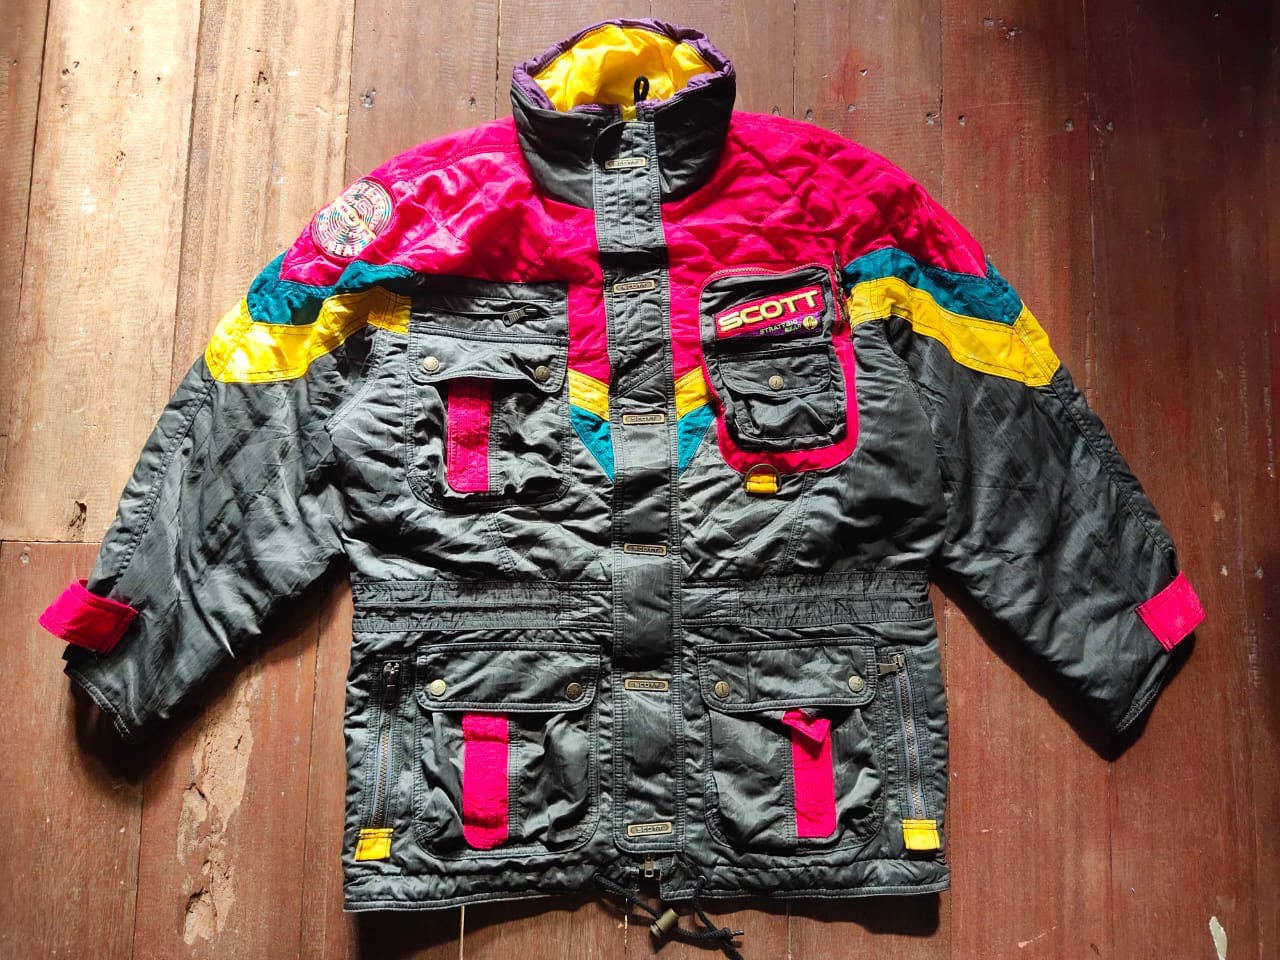 Schott rare unisex winter session jacket - 1